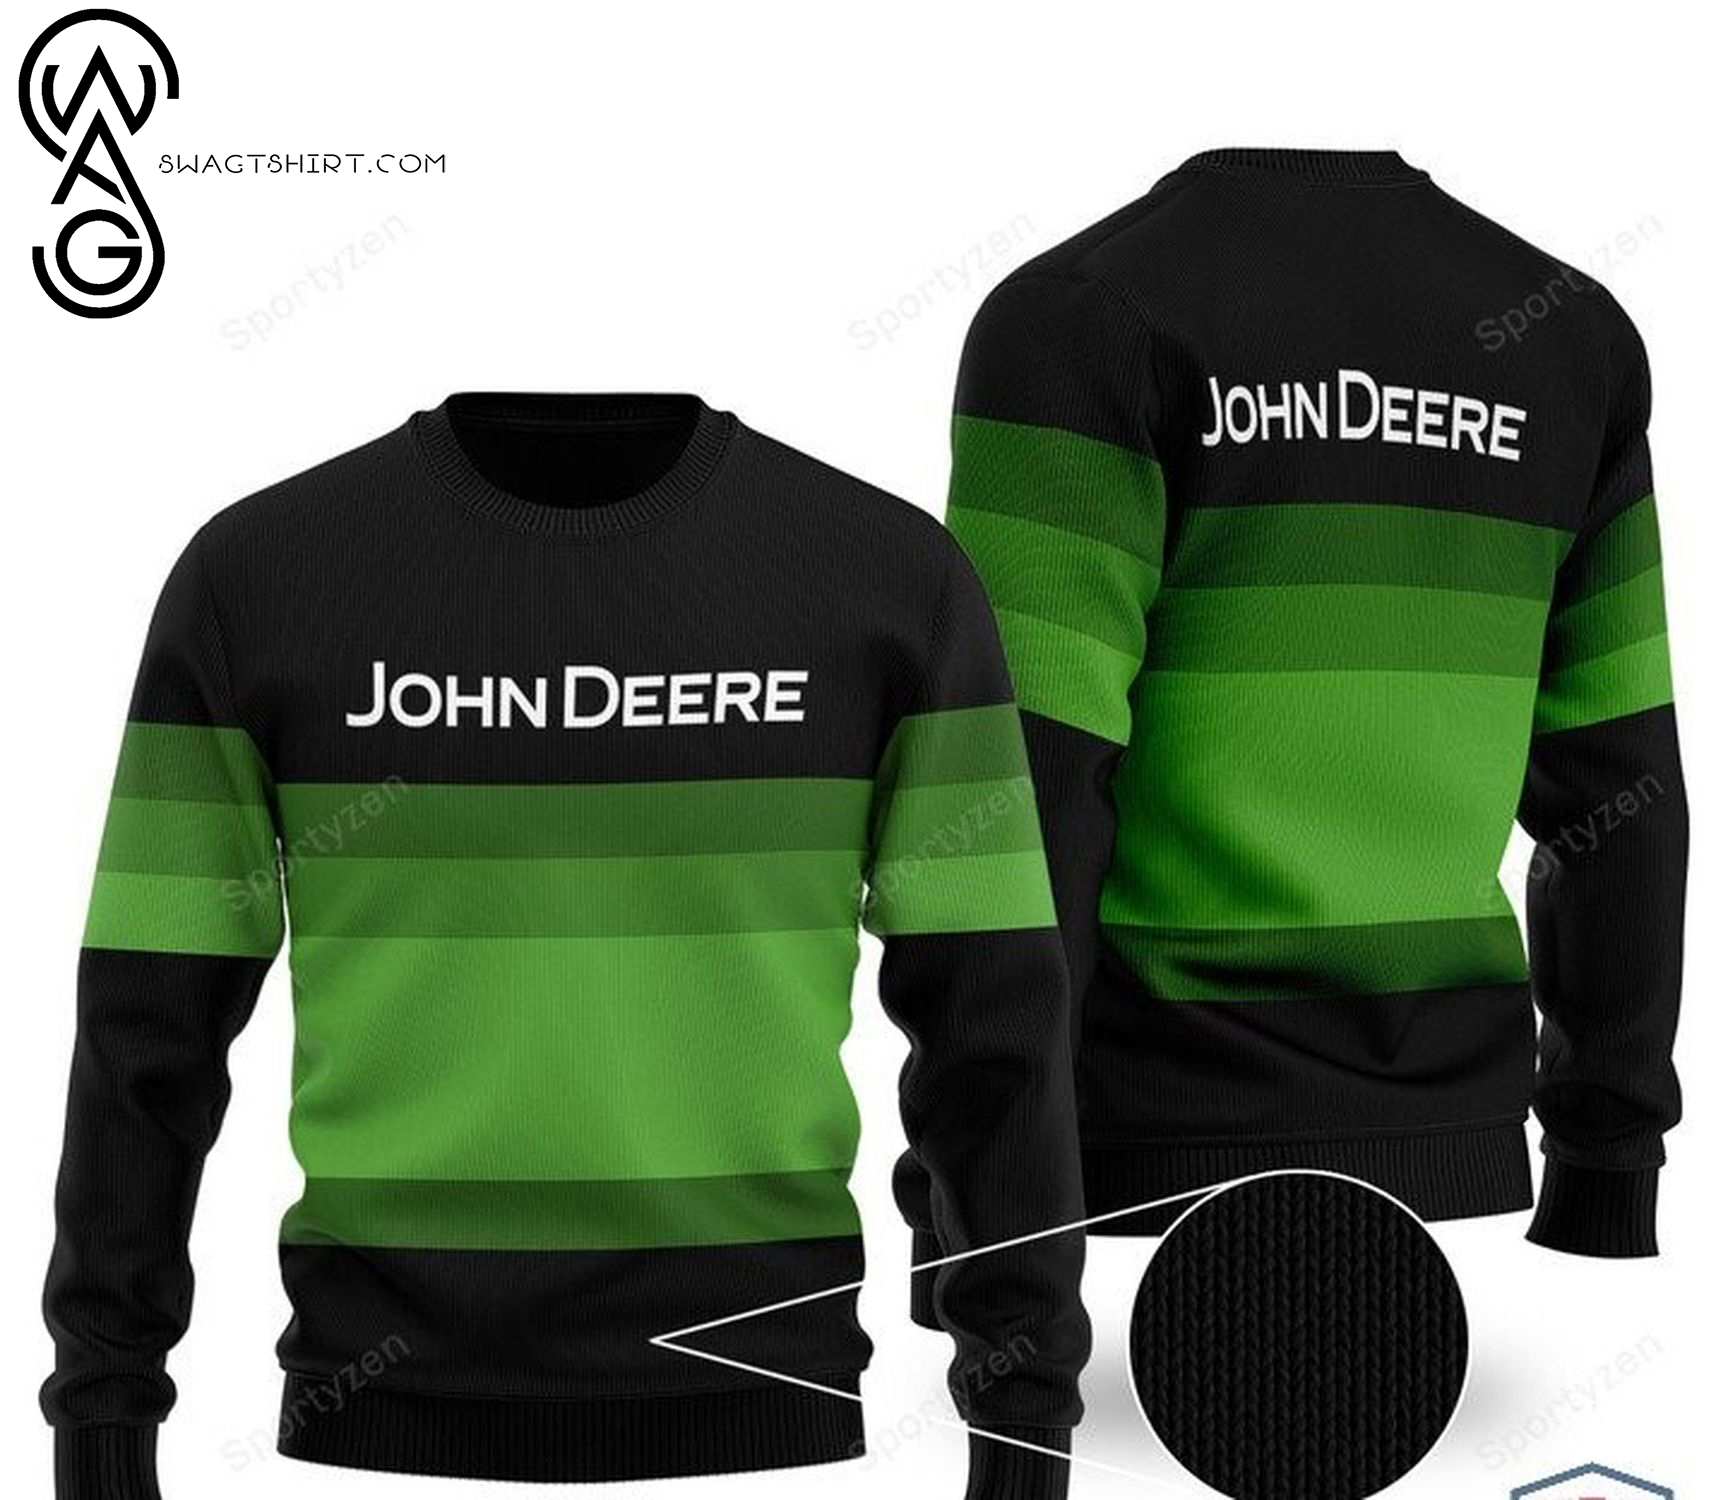 Deere And Company John Deere Full Print Ugly Christmas Sweater